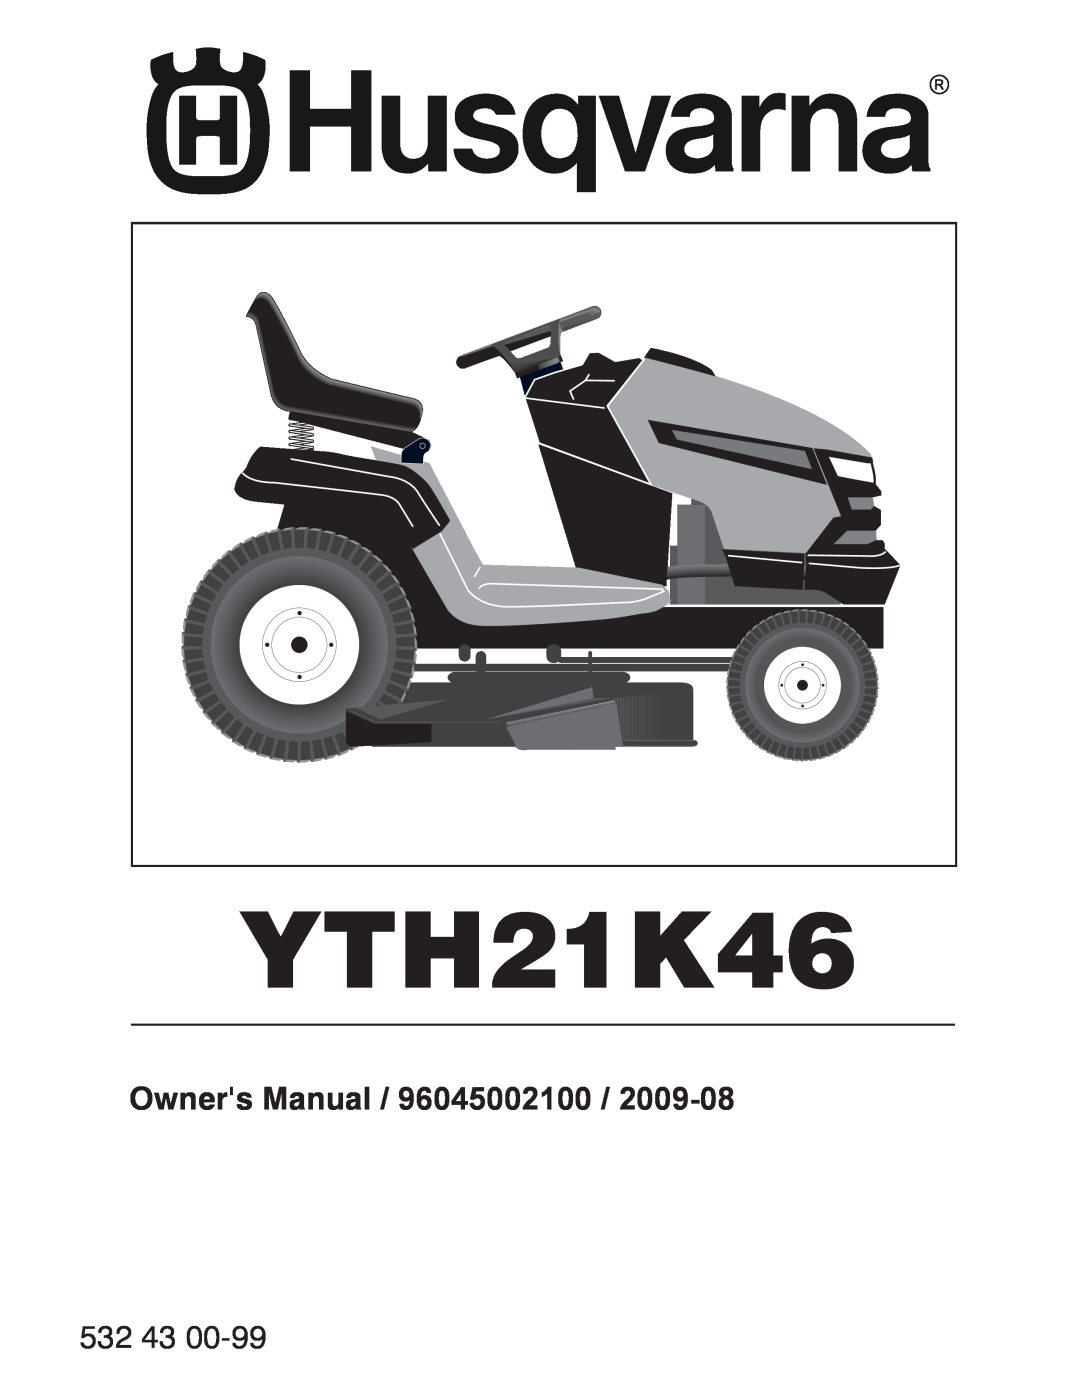 Husqvarna 96045002100 owner manual YTH21K46, 532 